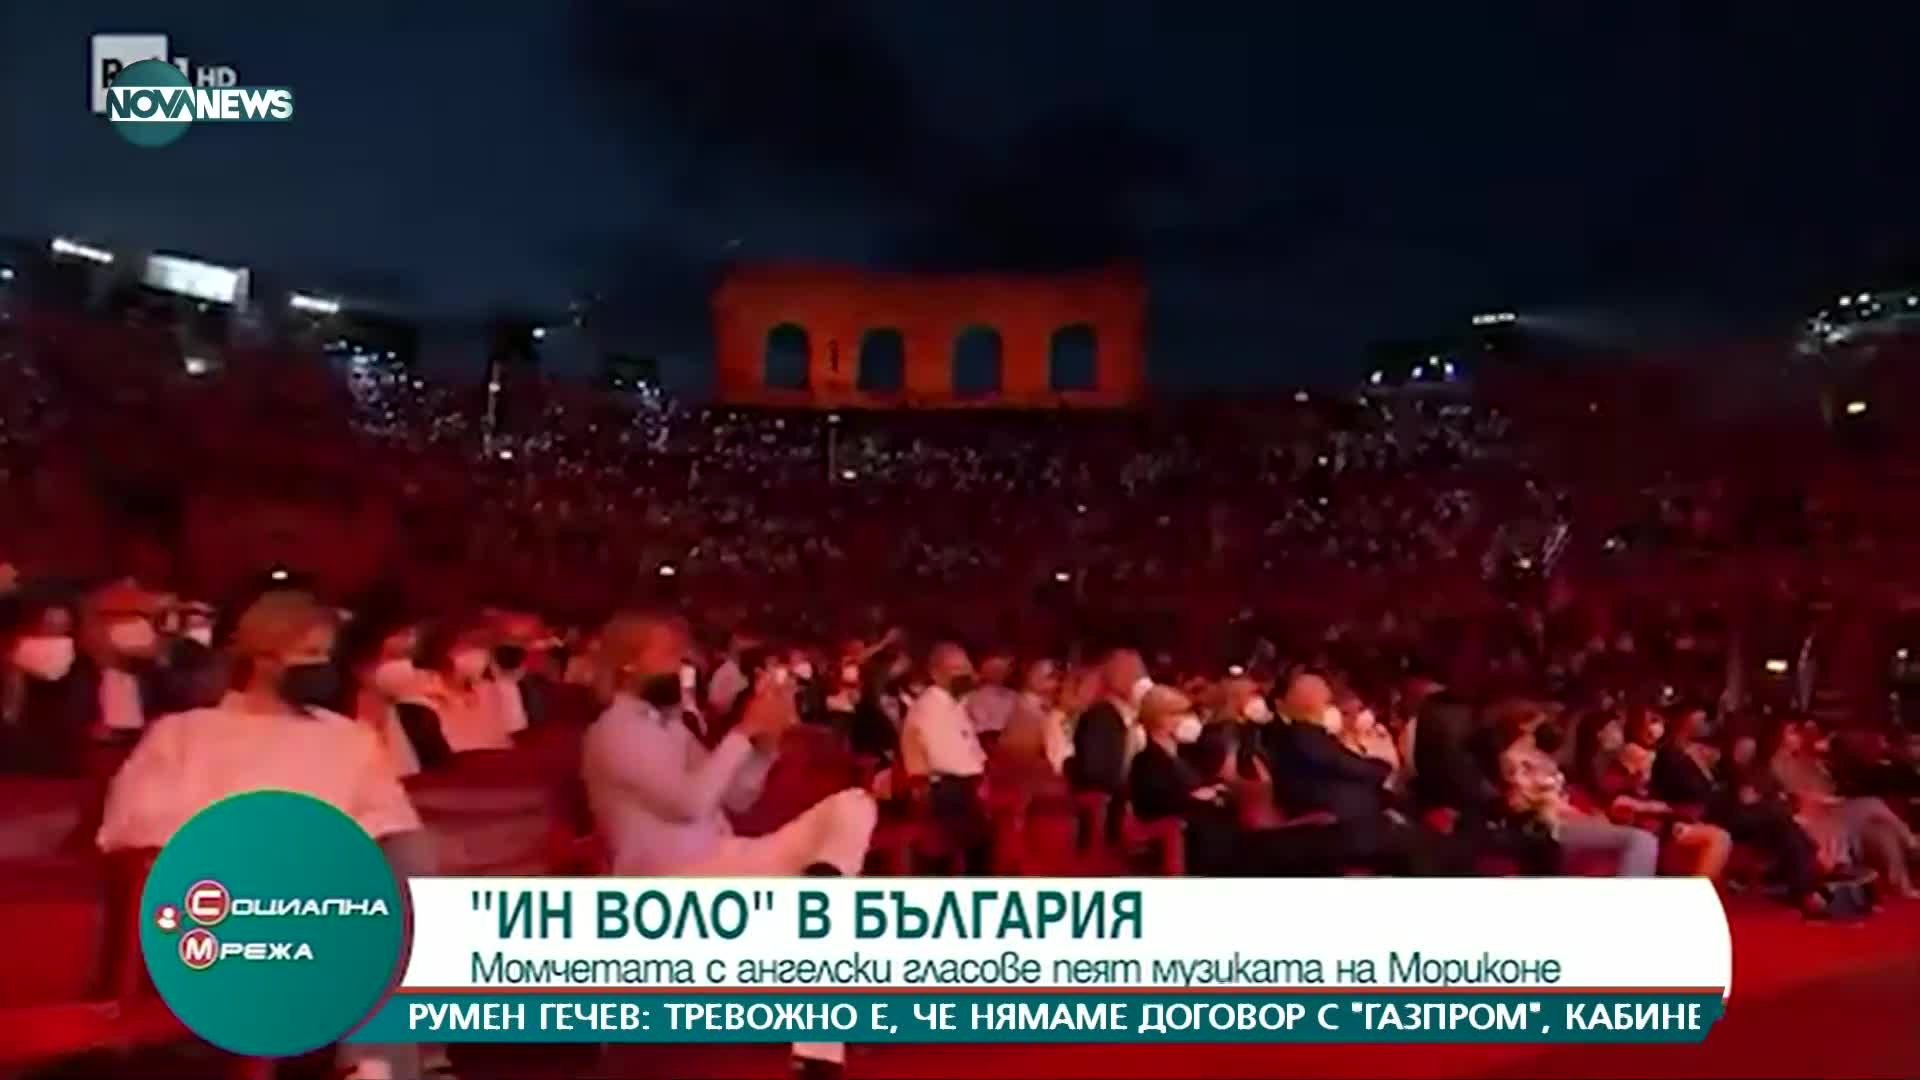 "Ил воло" с концерт в България